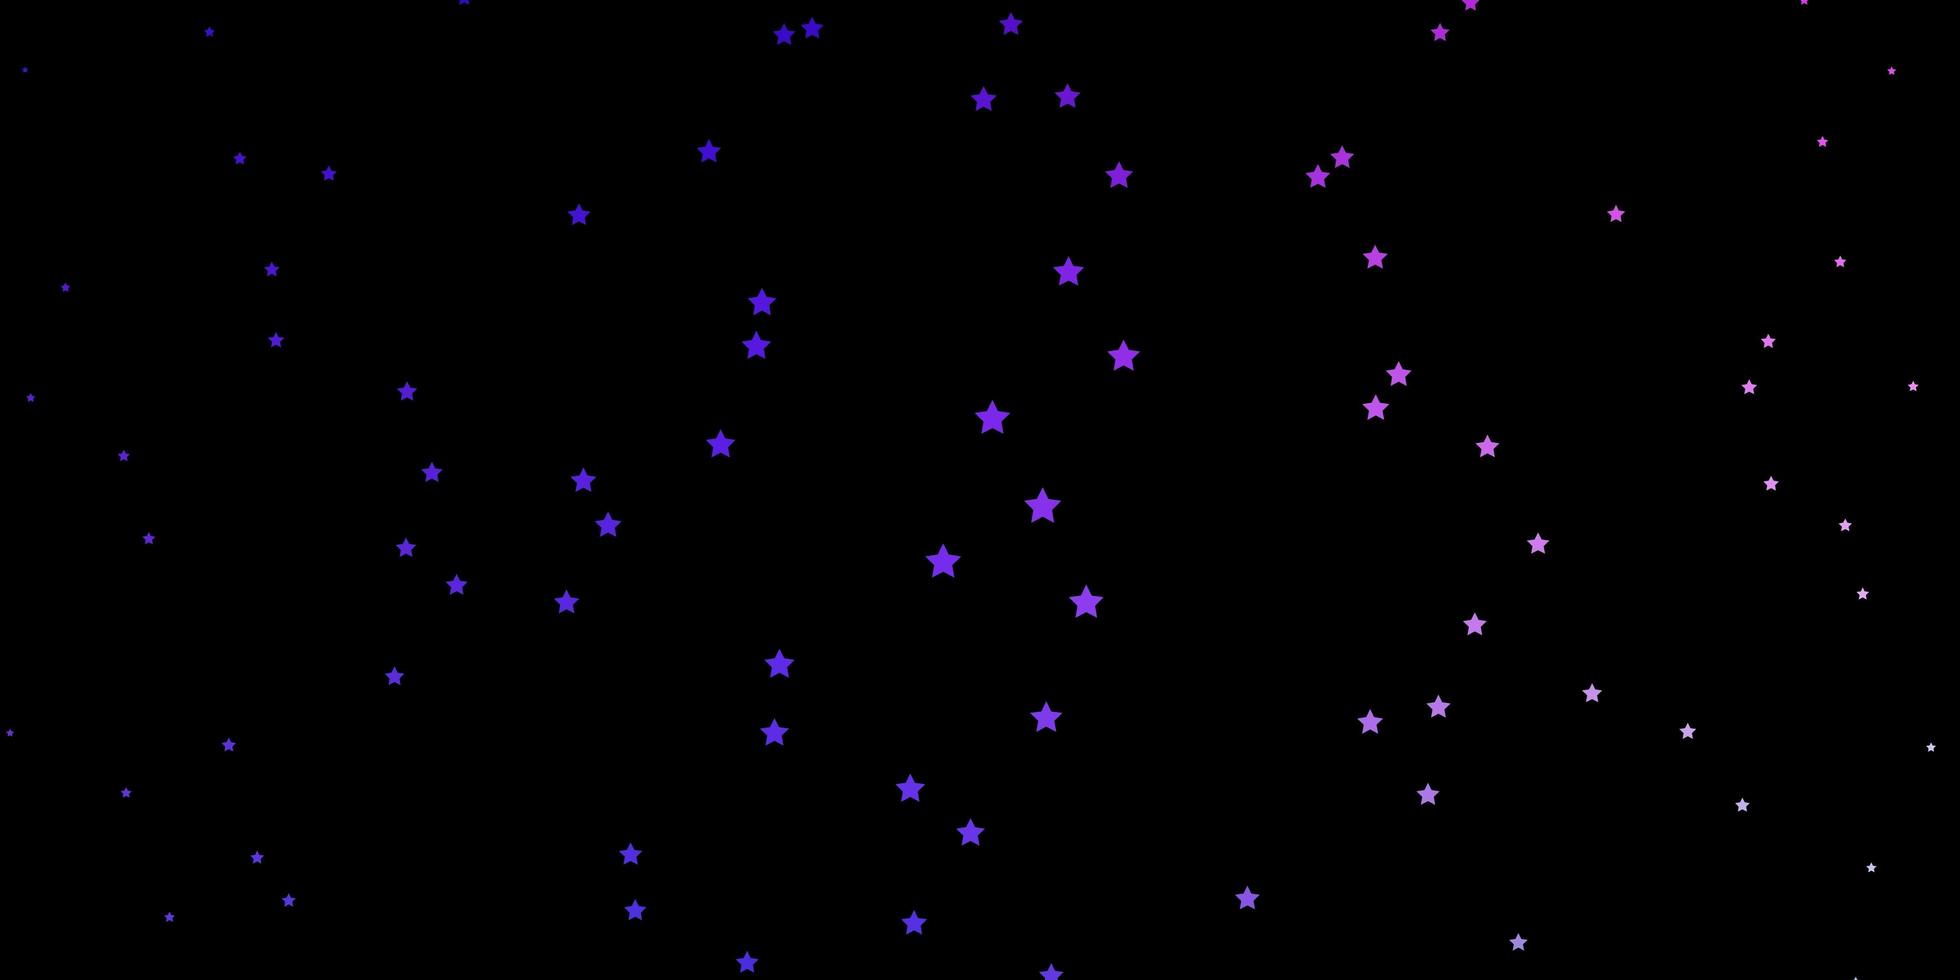 modelo de vetor rosa escuro, azul com estrelas de néon.